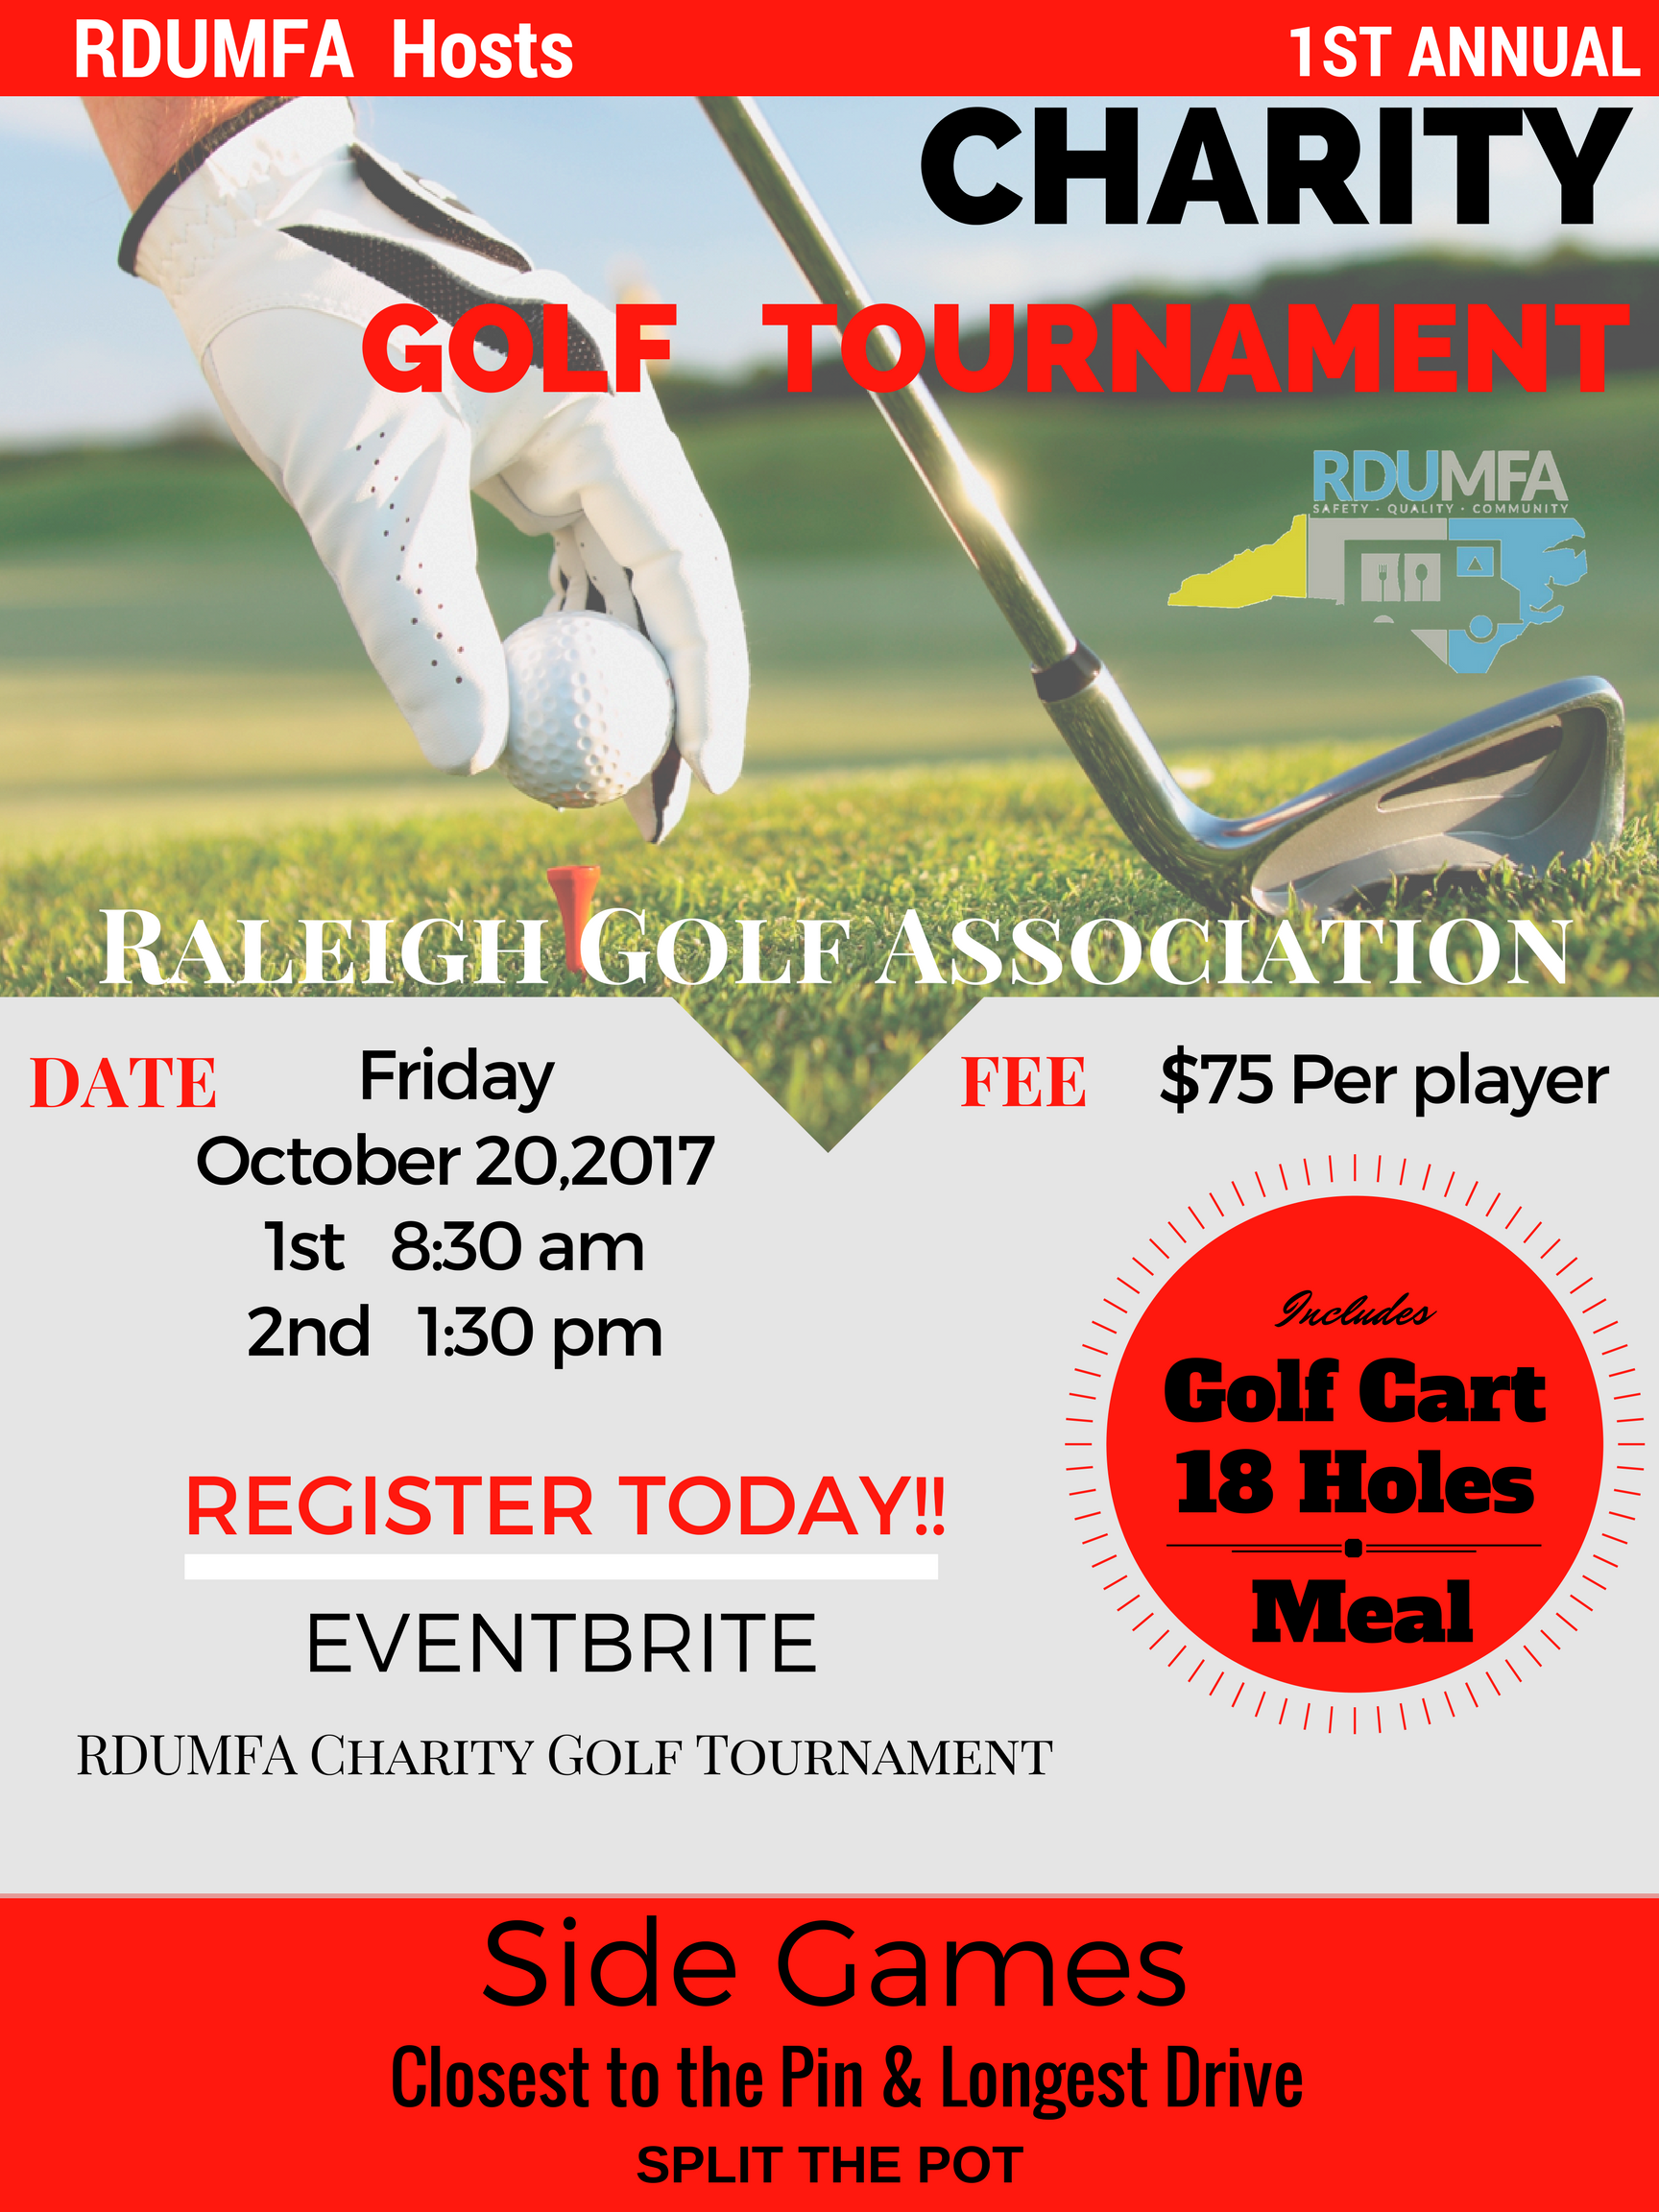 RDUMFA Charity Golf Tournament